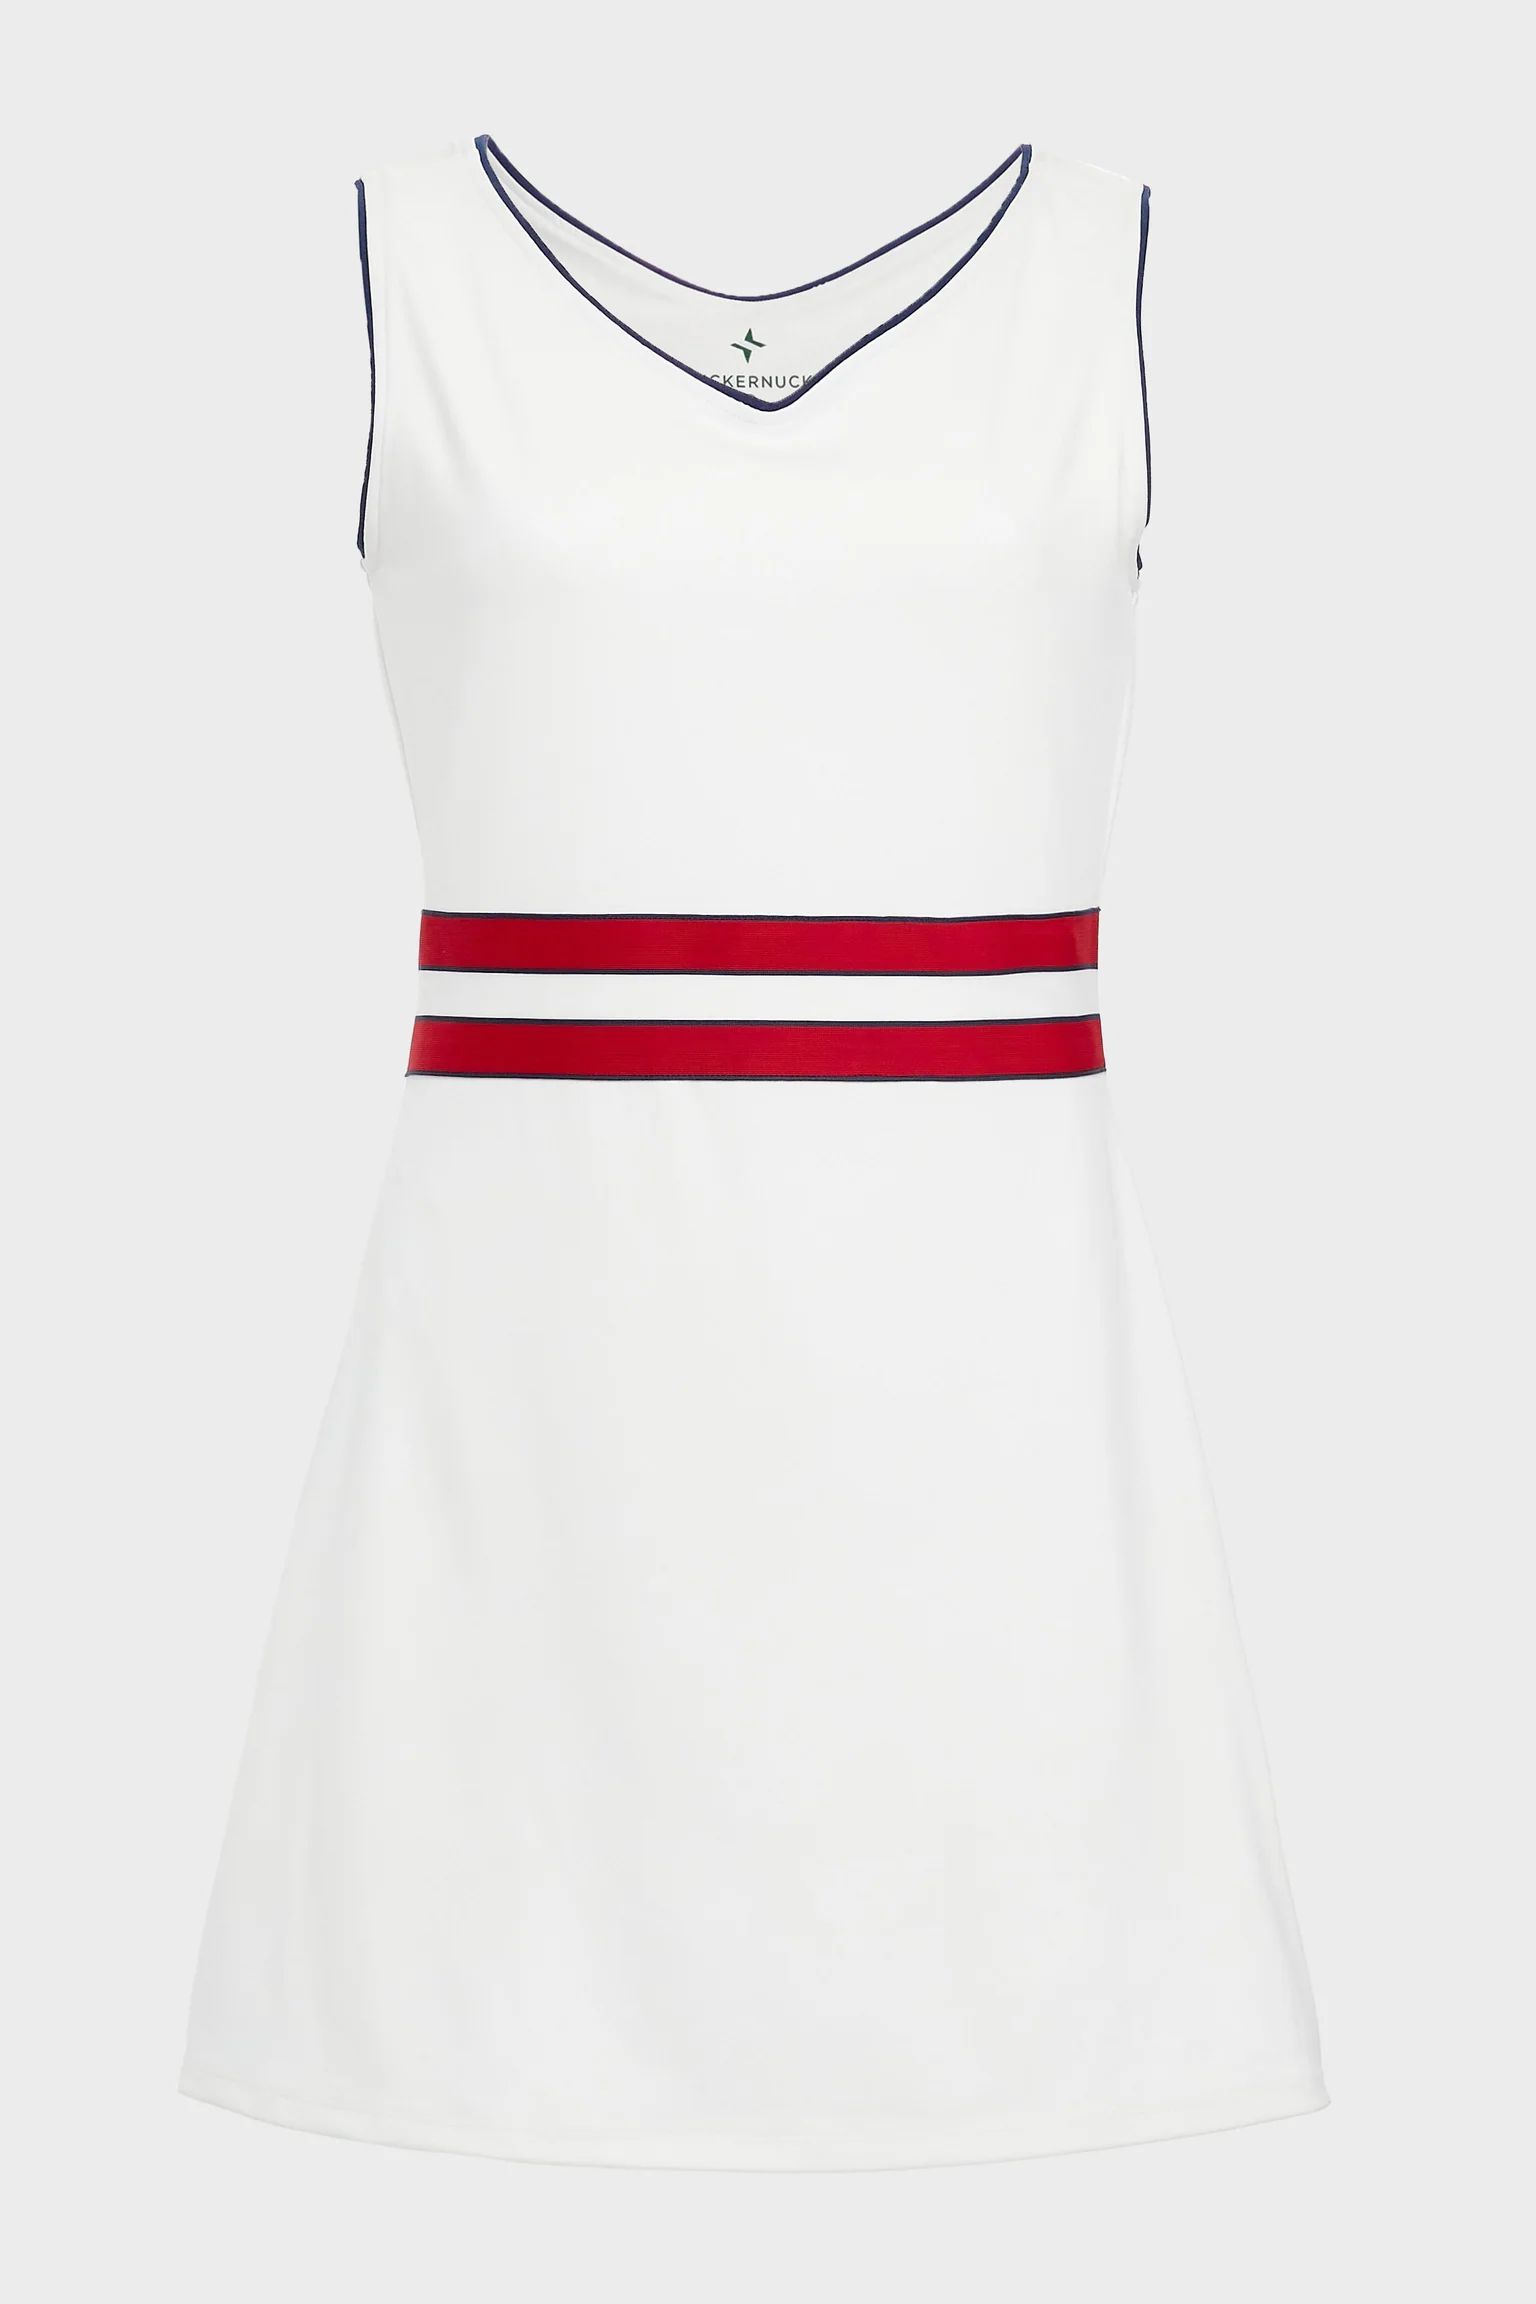 Americana McKay Tennis Dress | Tuckernuck (US)